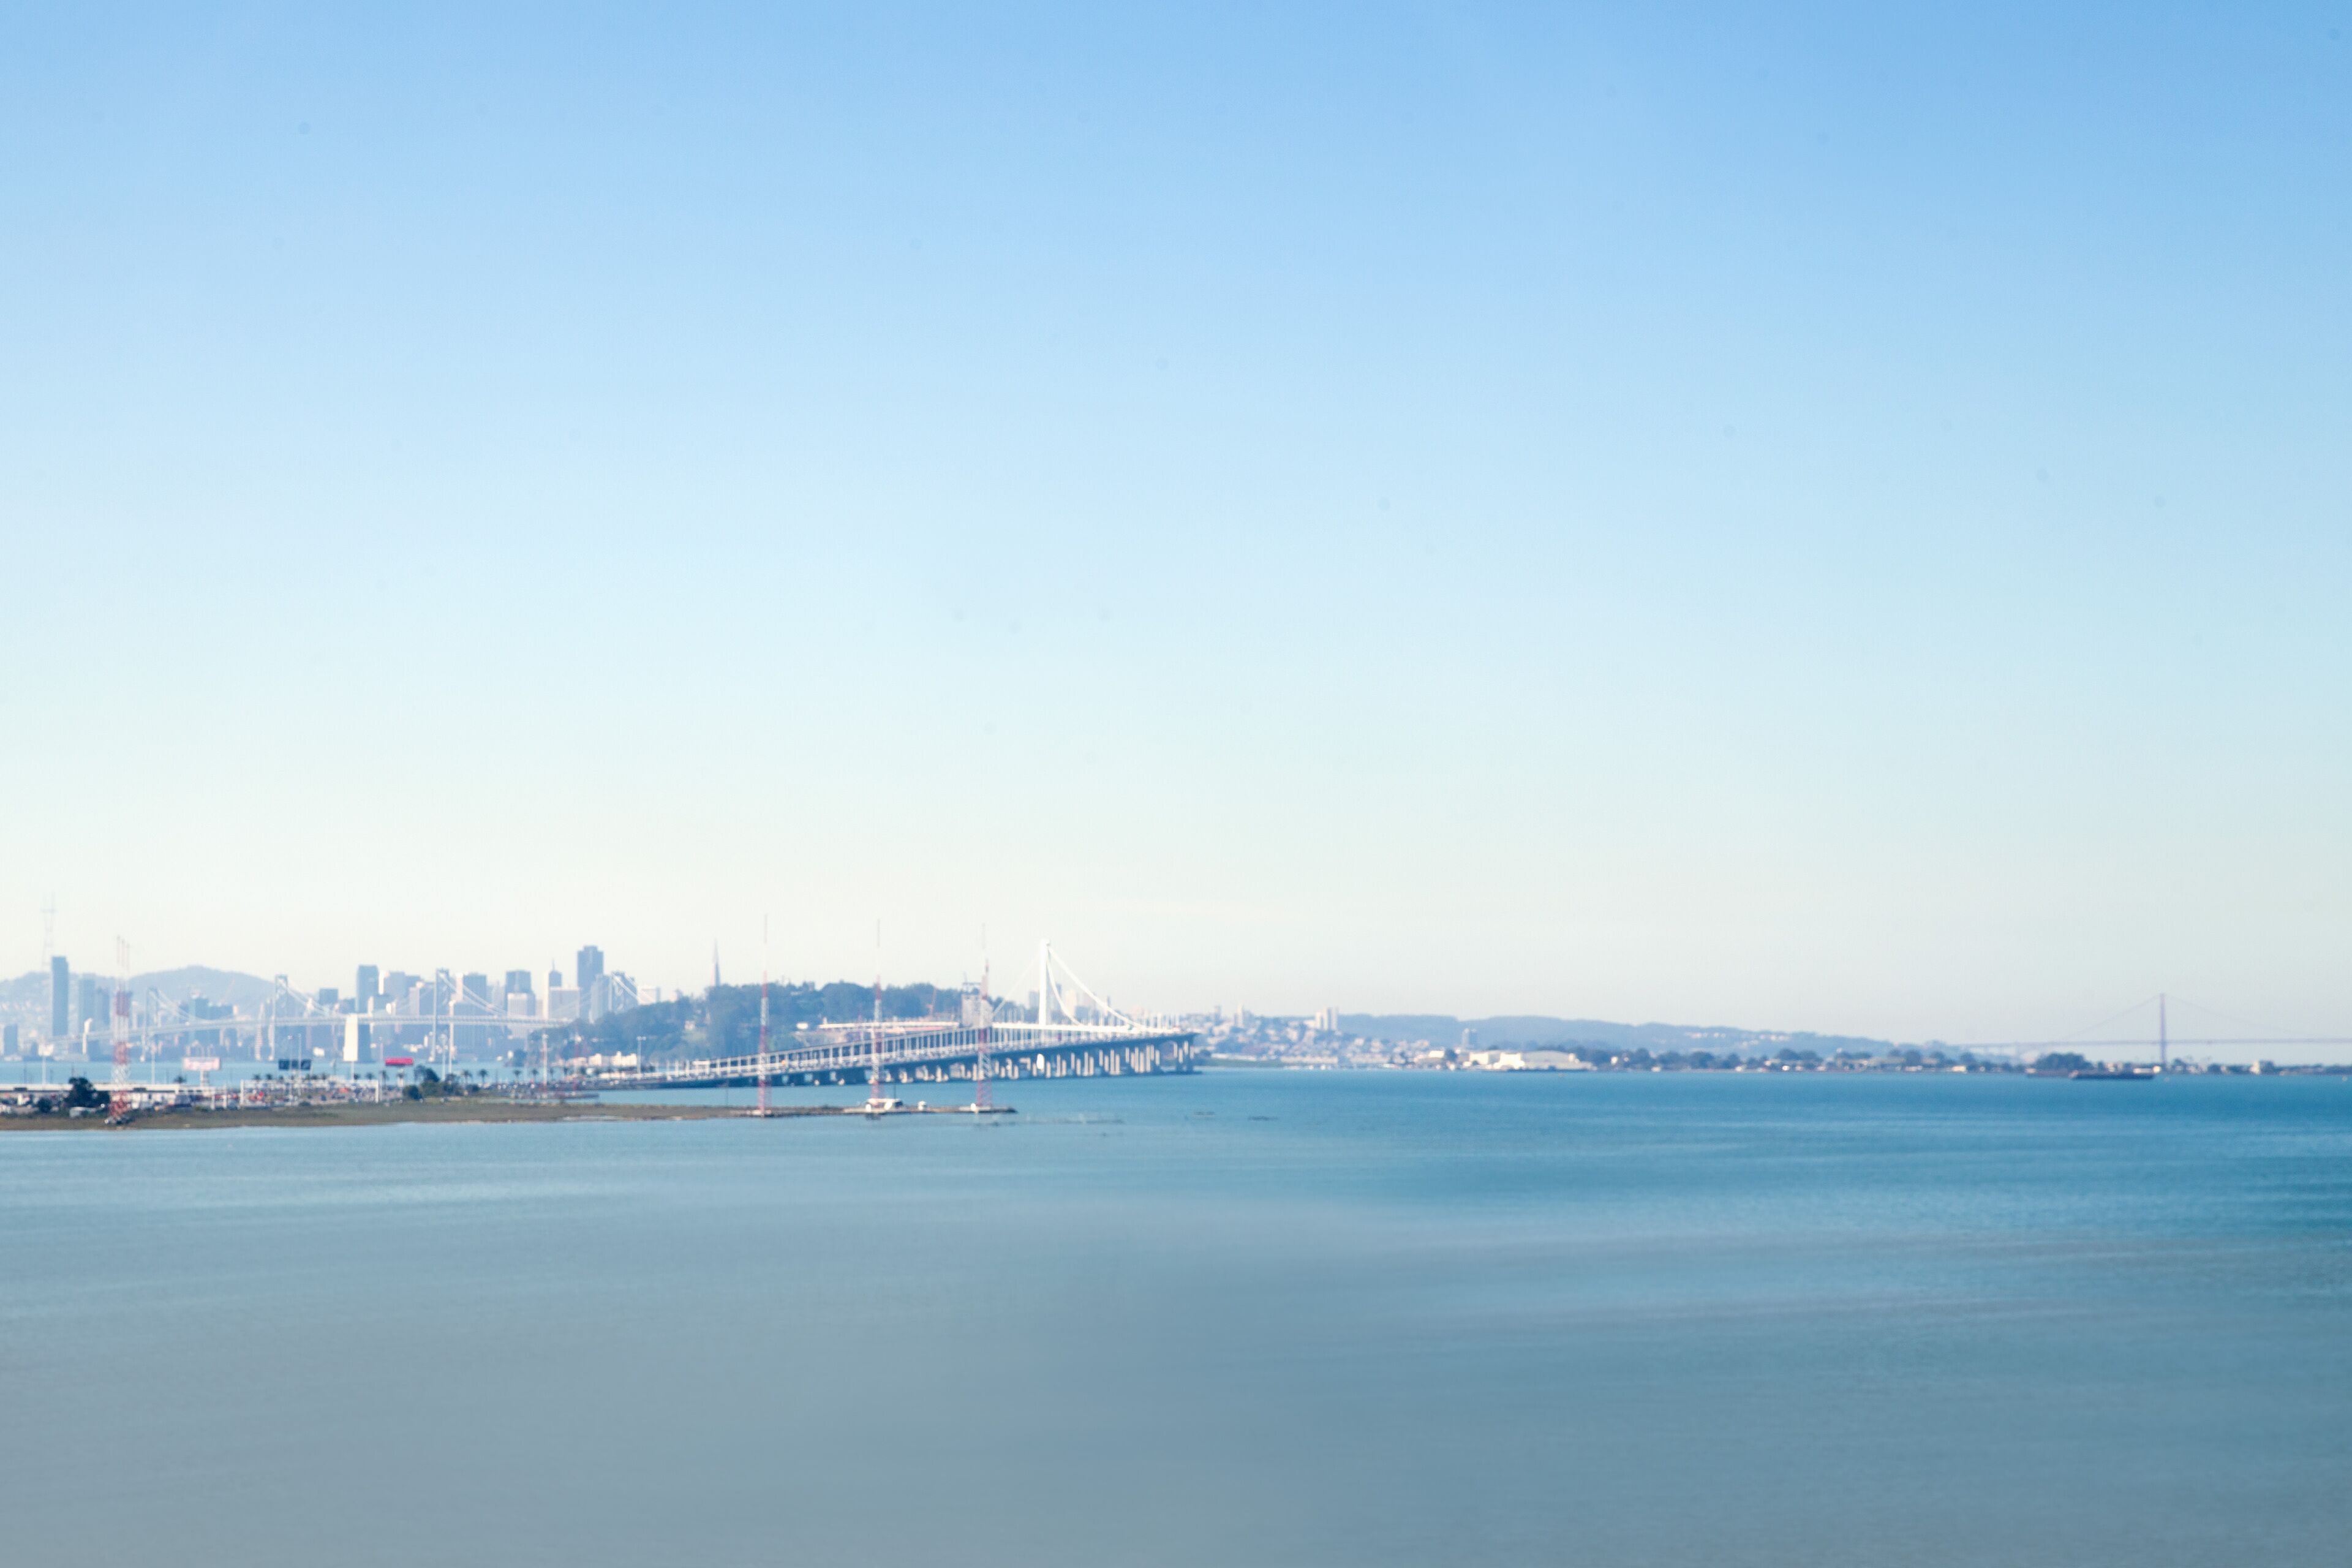 Sonesta Emeryville - San Francisco Bay Bridge